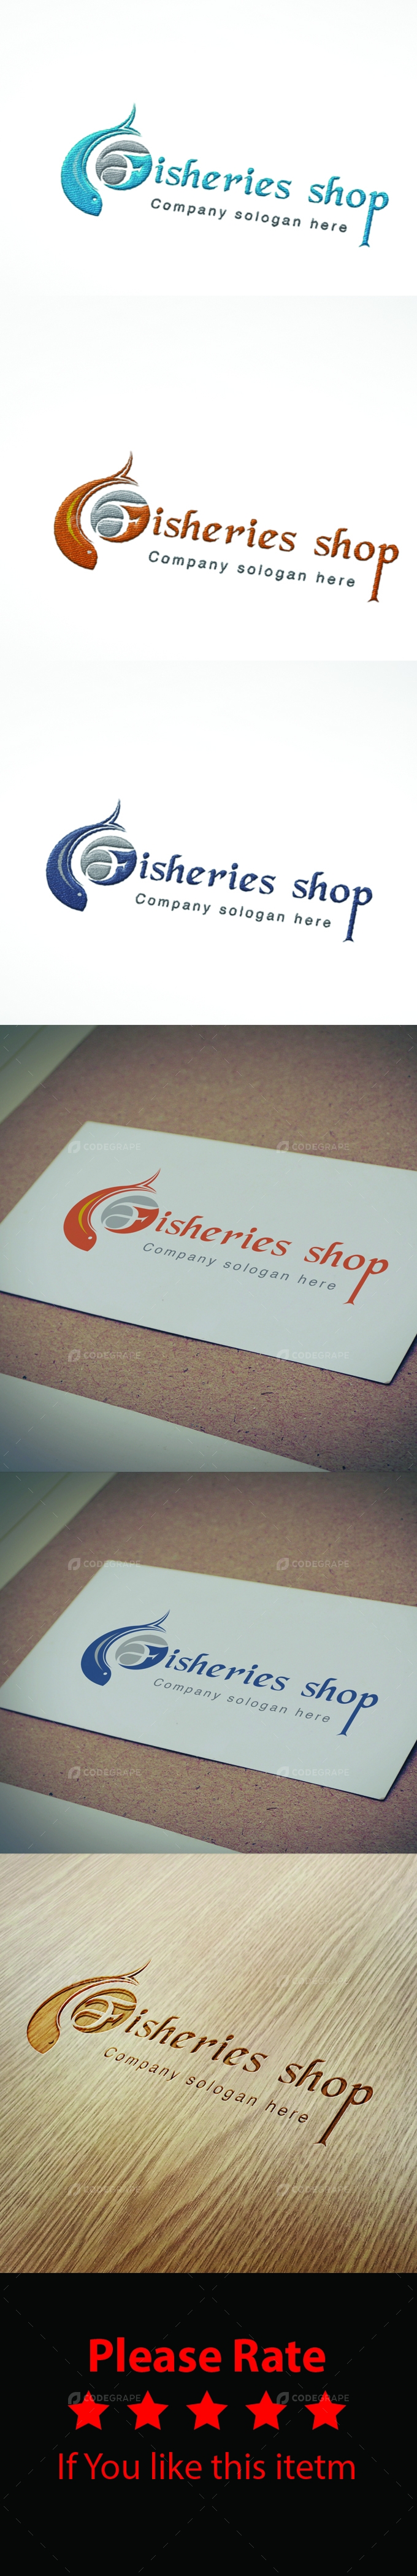 Fisheries Shop Logo